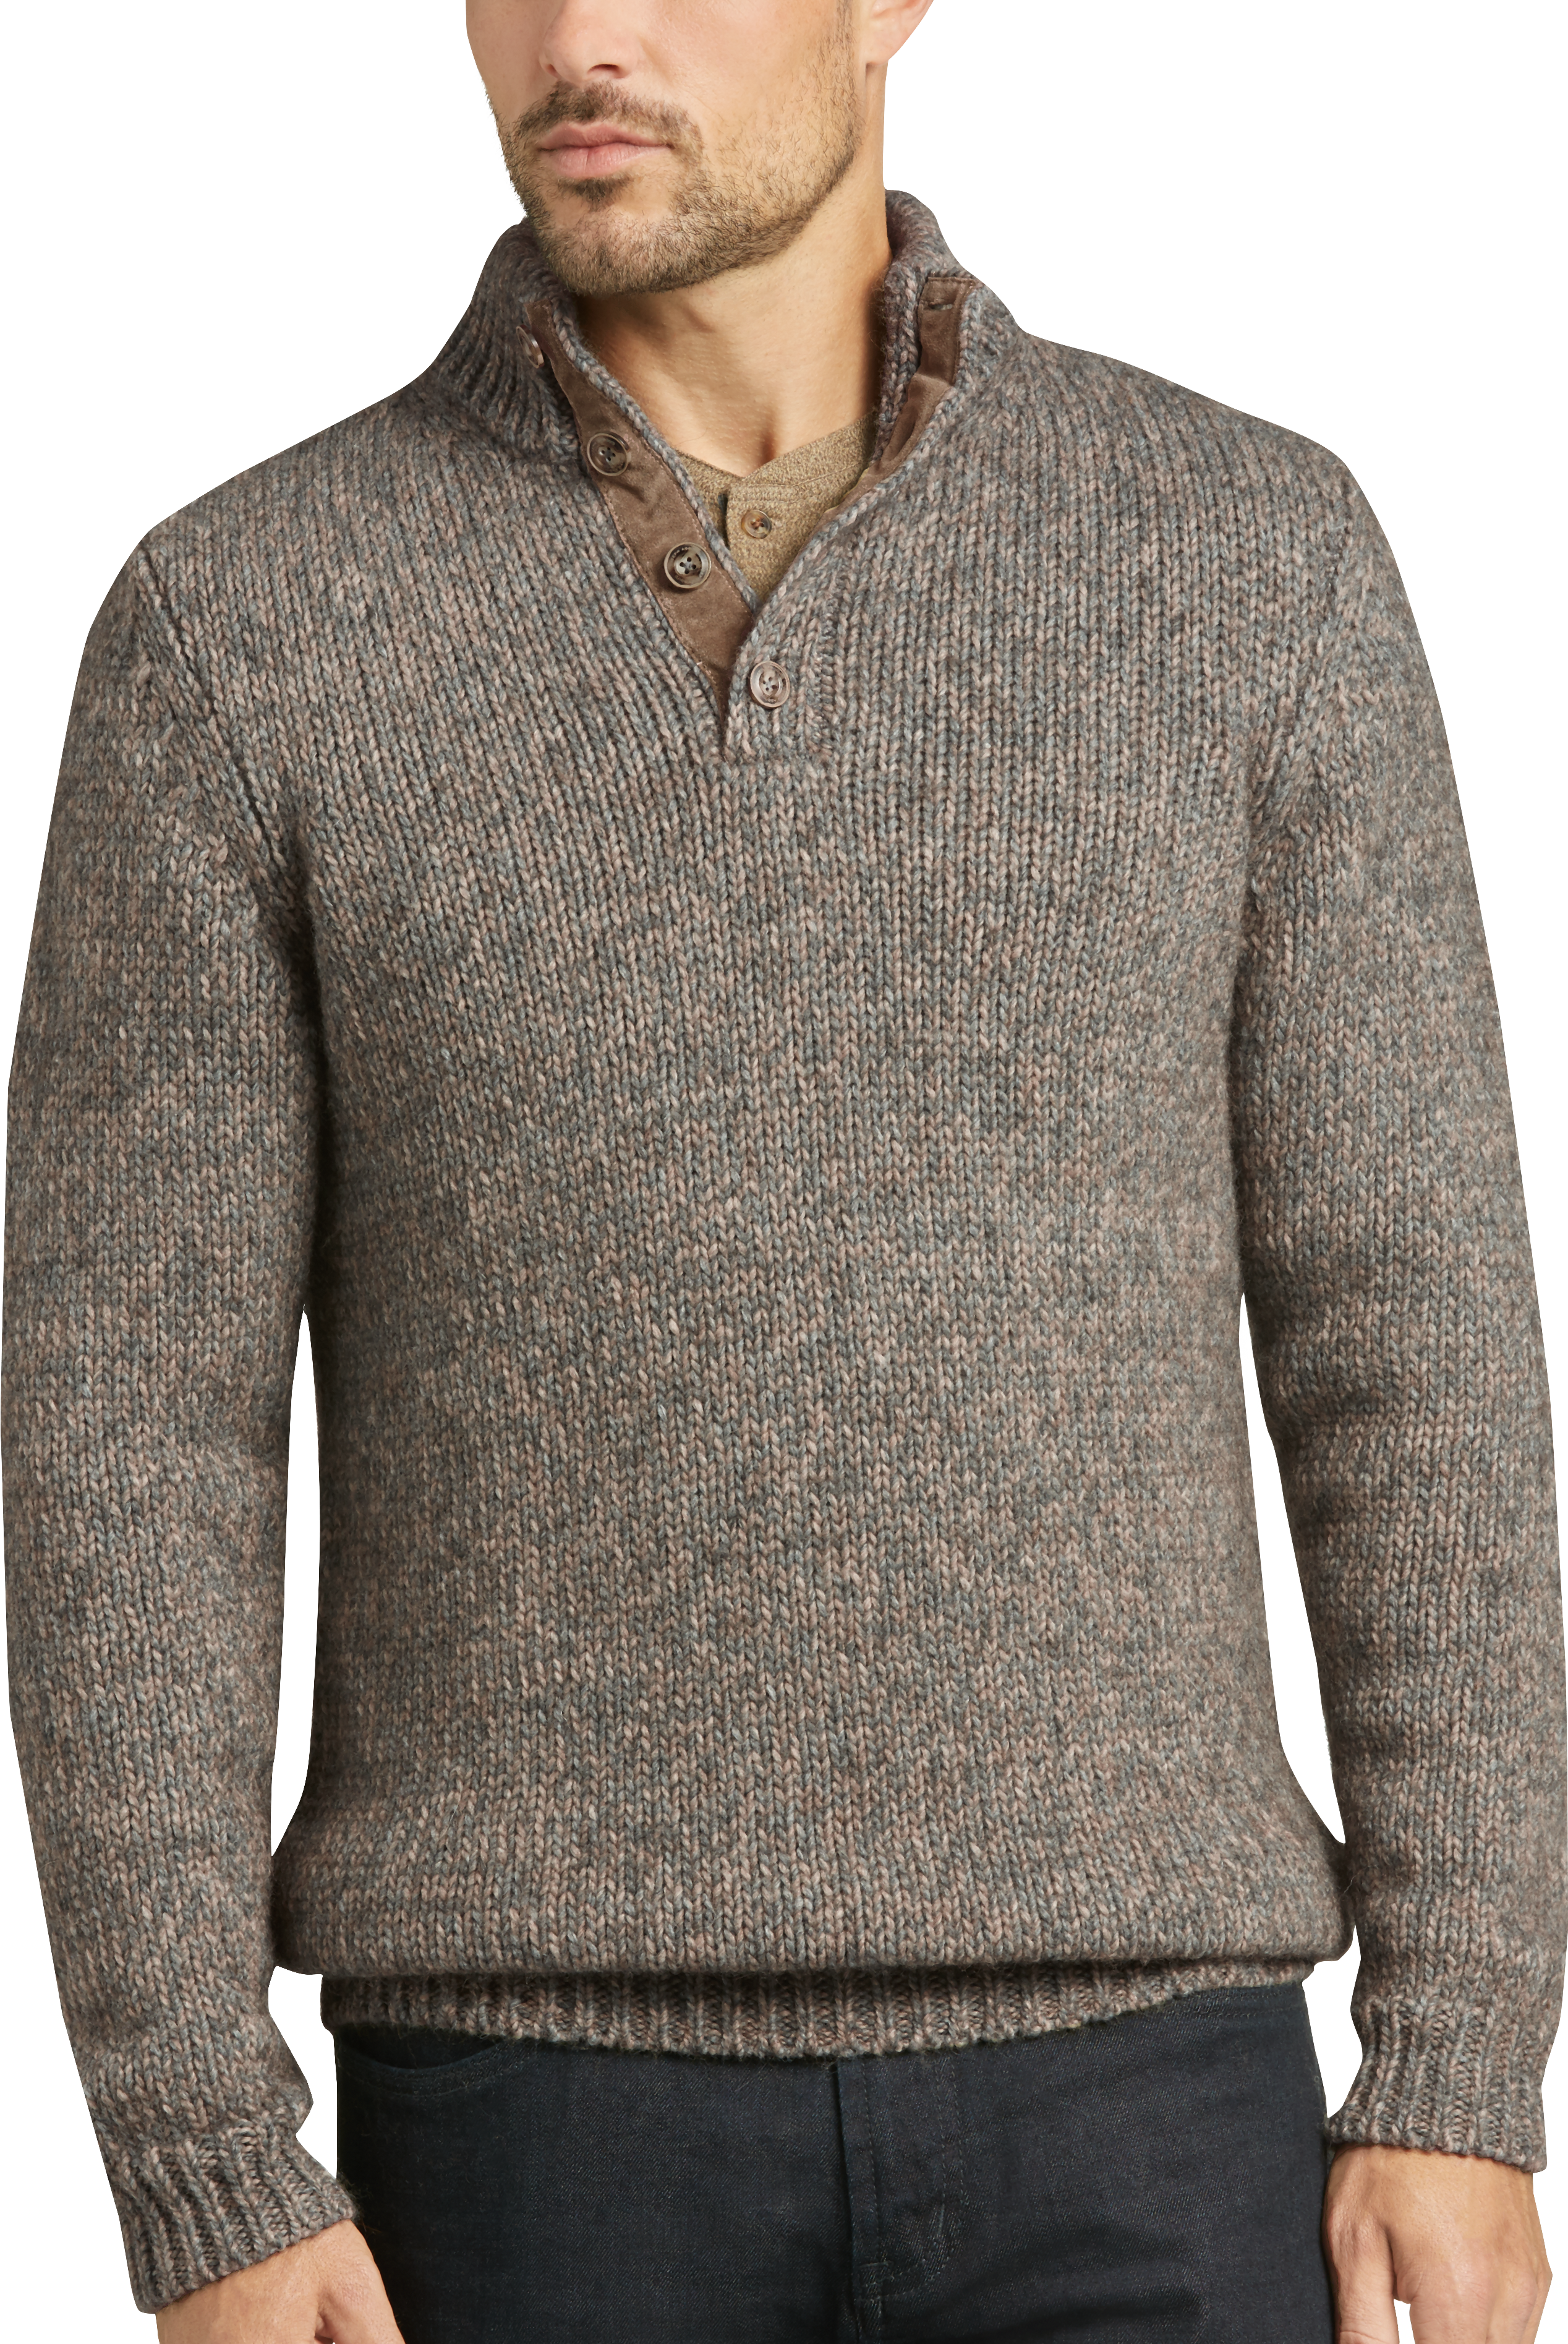 Joseph Abboud Light Brown Mock Neck Sweater - Men's Sale | Men's Wearhouse